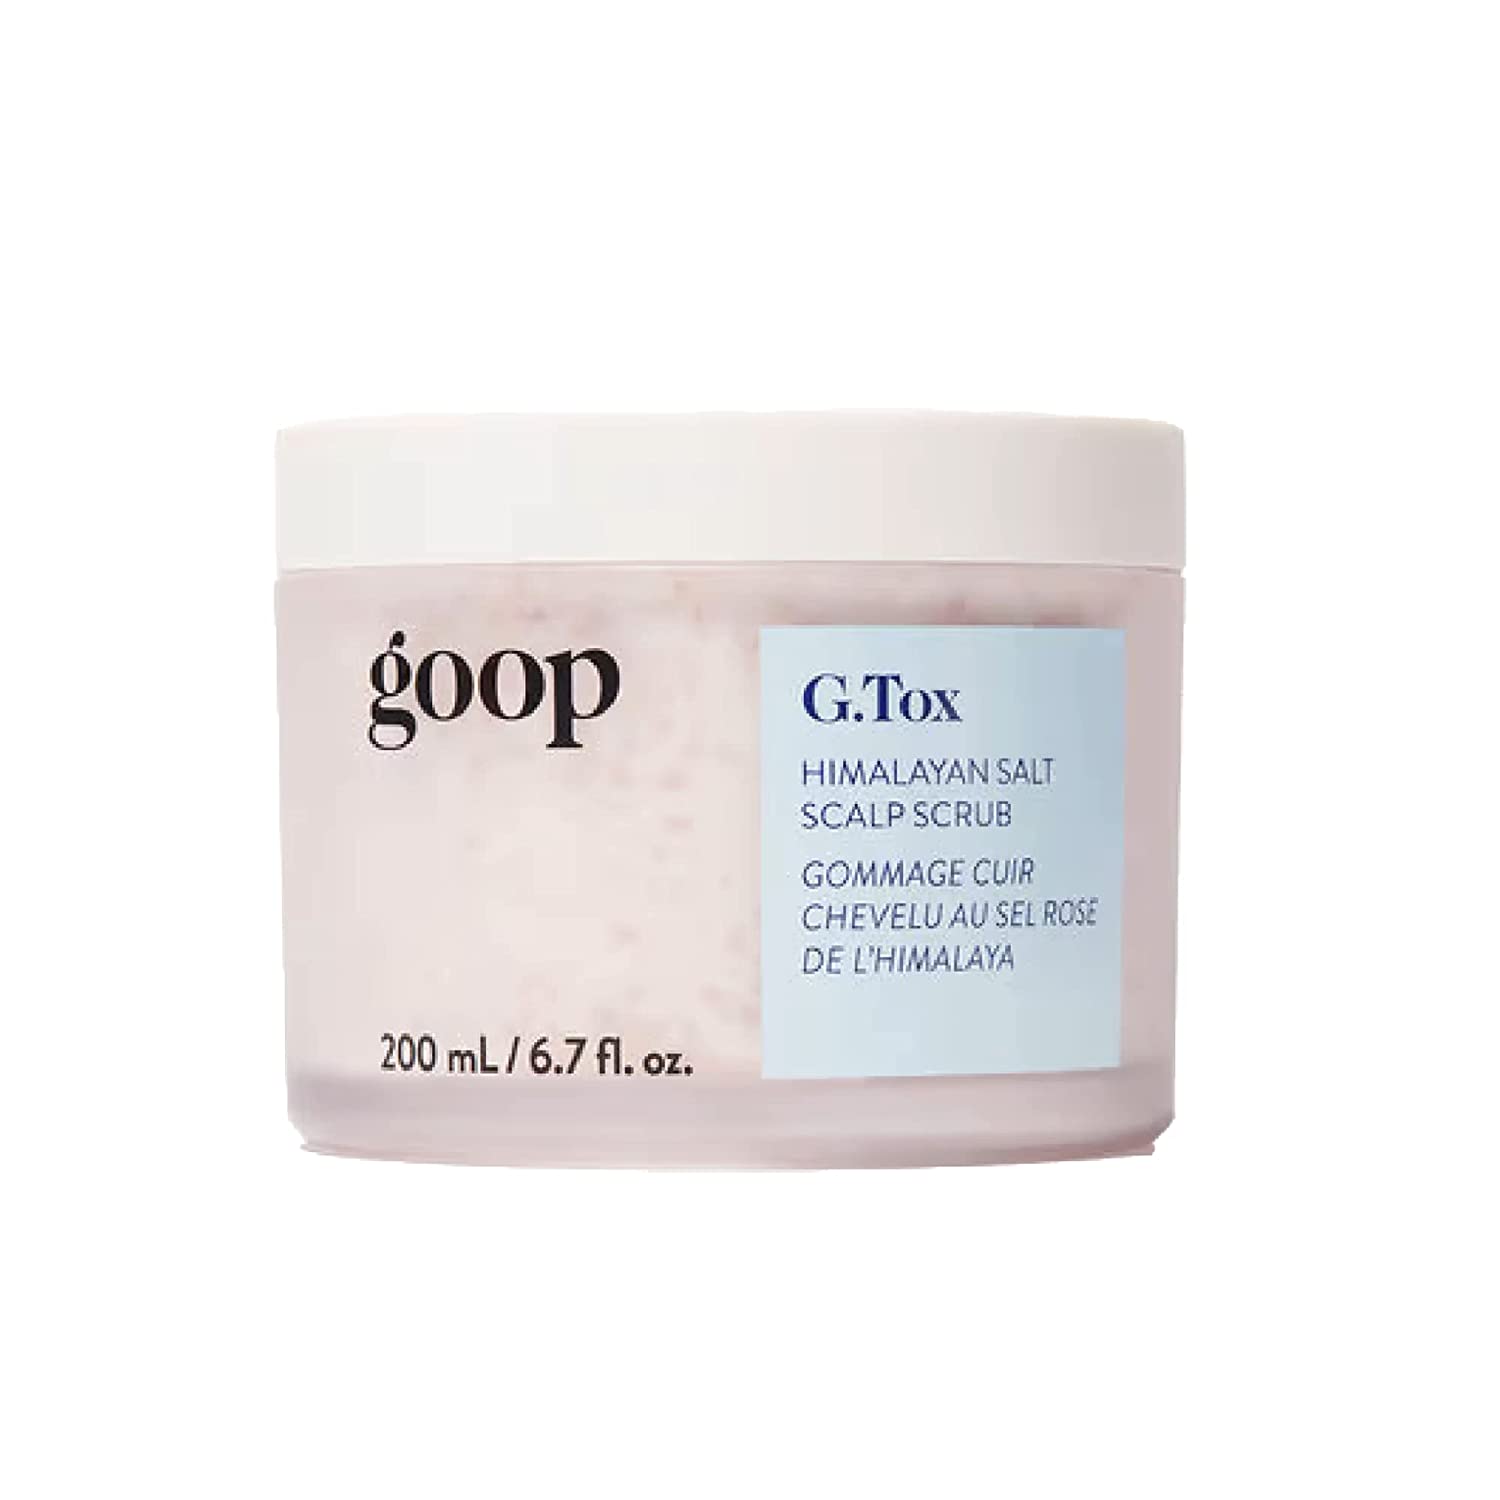 goop g.tox himalayan salt scalp scrub shampoo